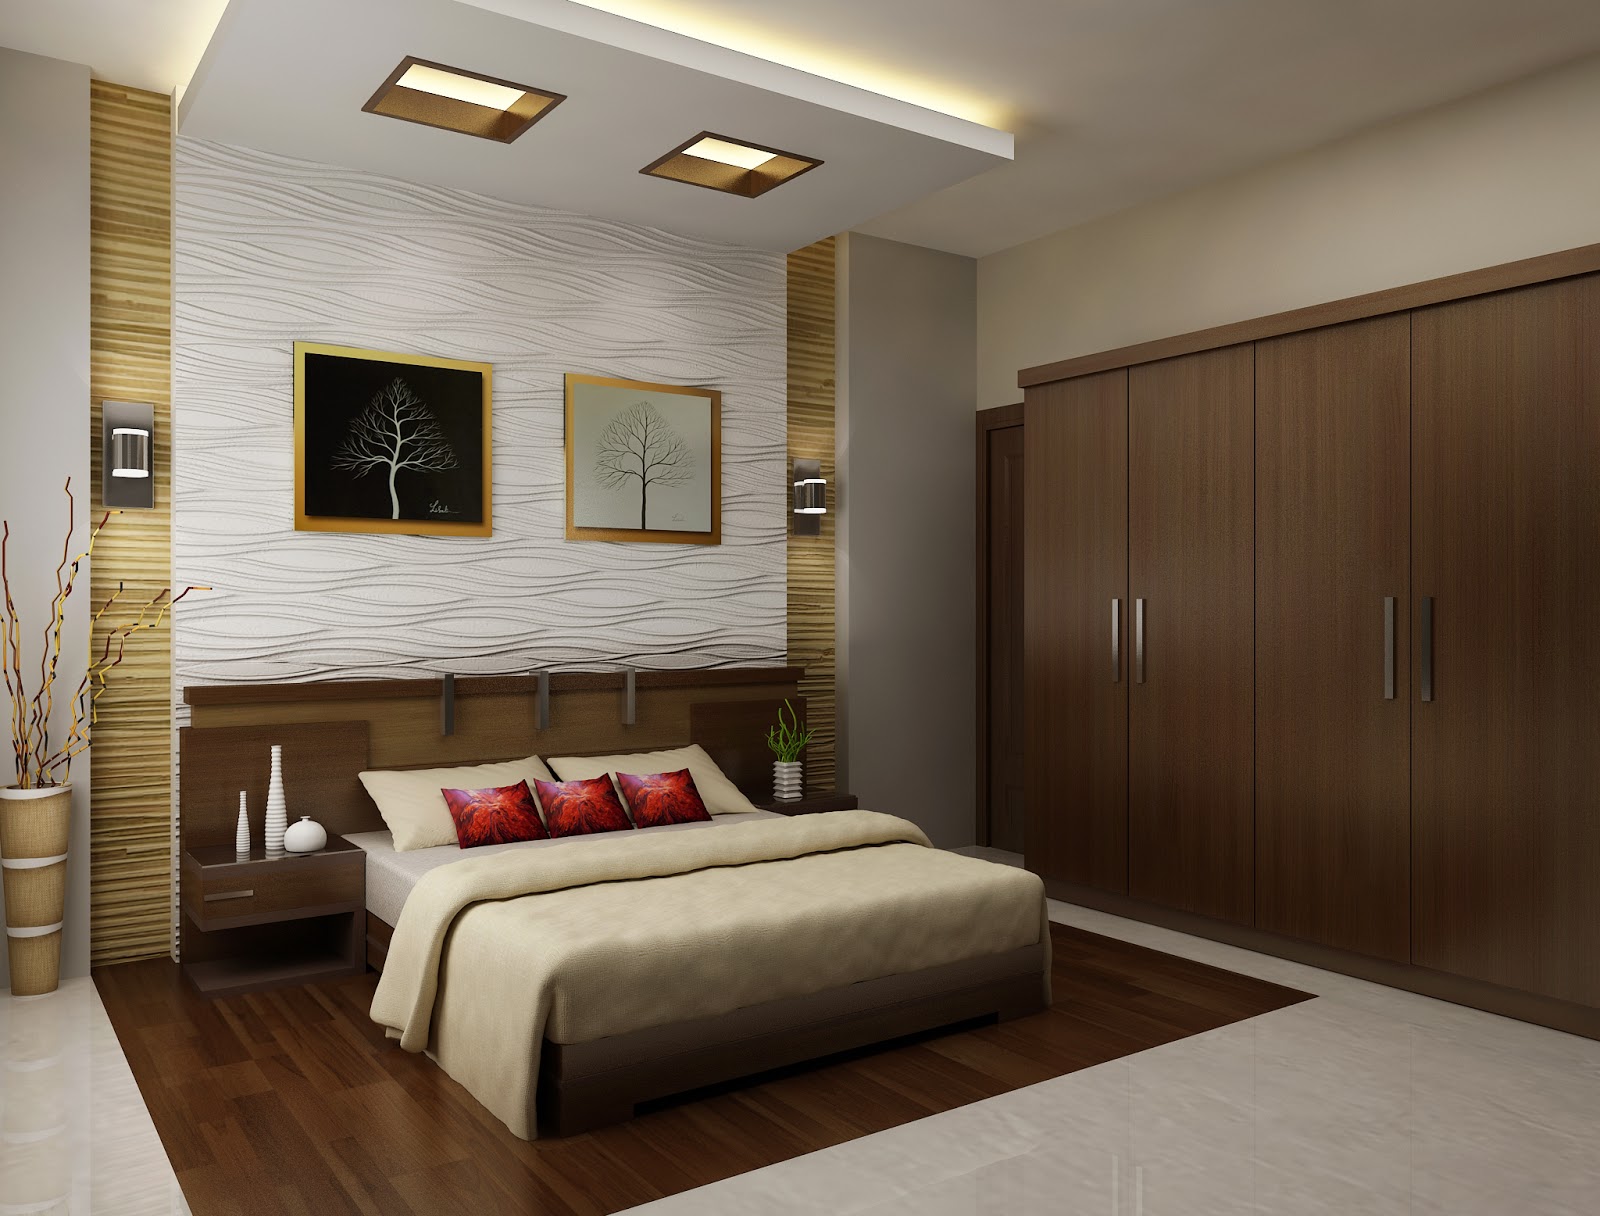 Kerala Interior Design Bedroom